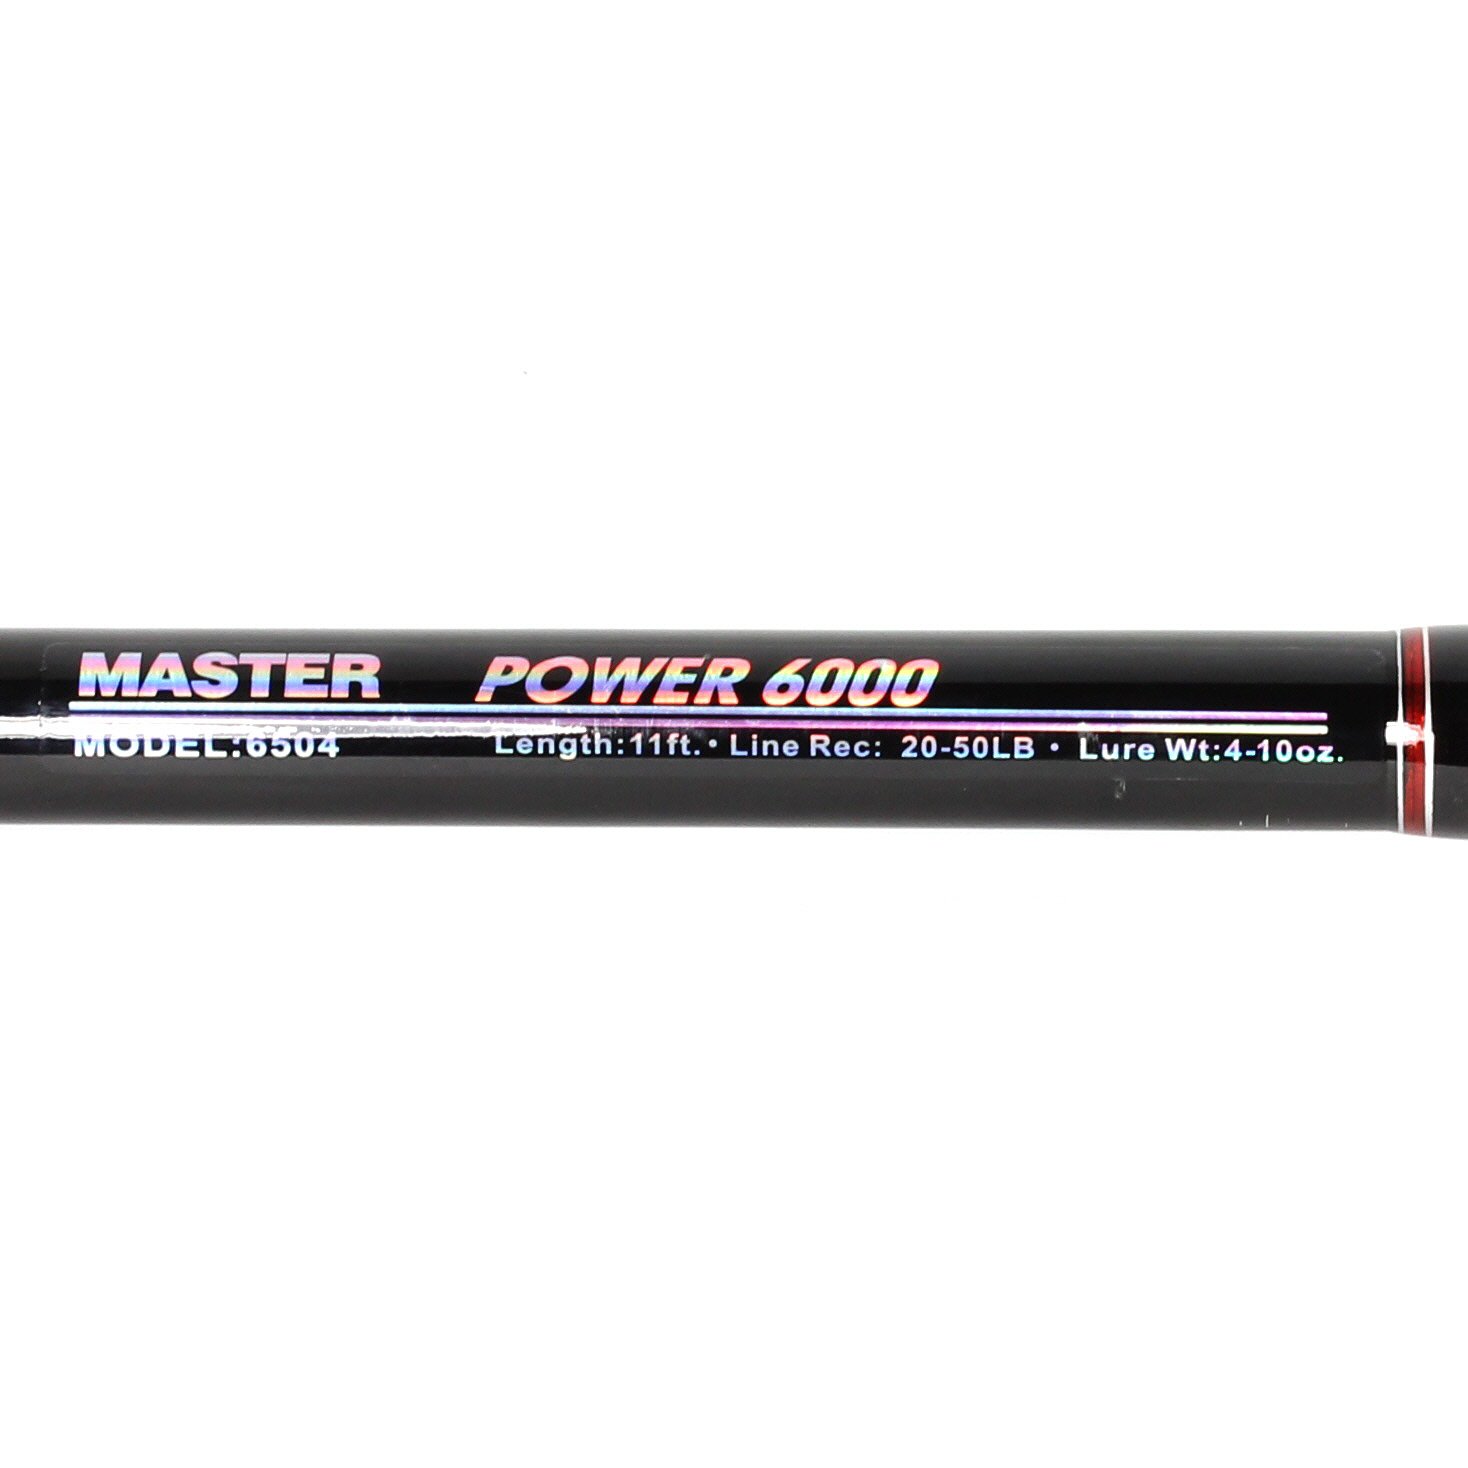 Master Power 6000 model 6475 7' Rod w/Garcia Mitchell 302 salt